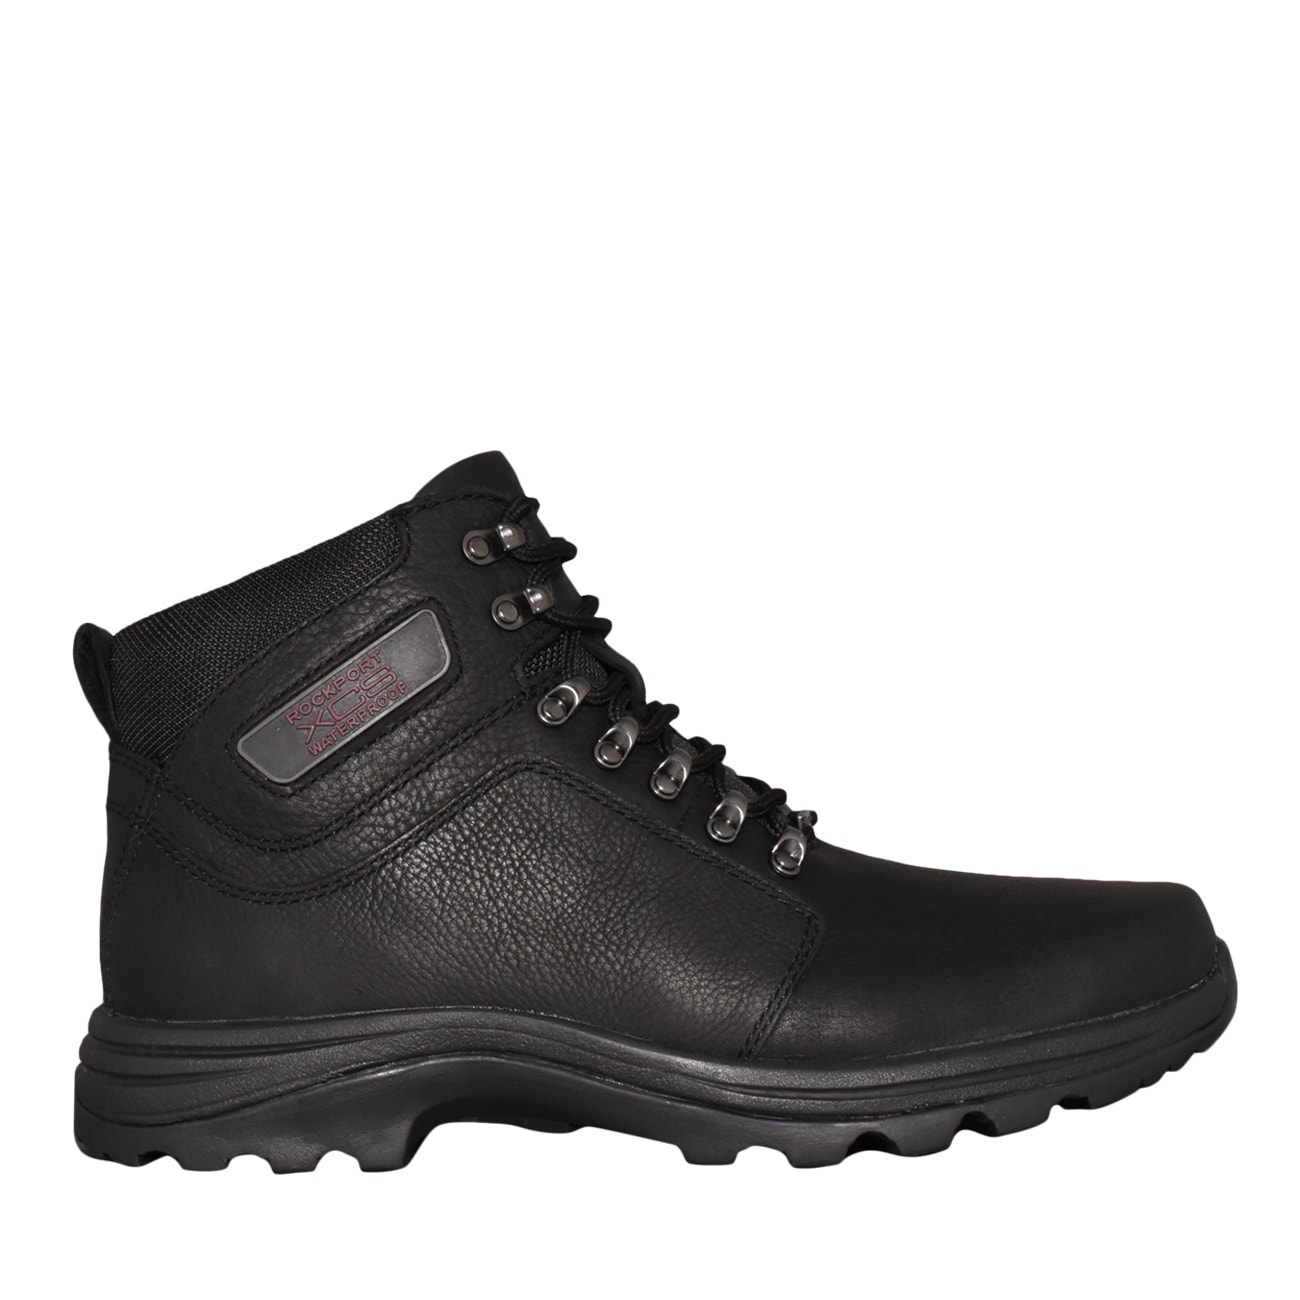 rockport elkhart boots black